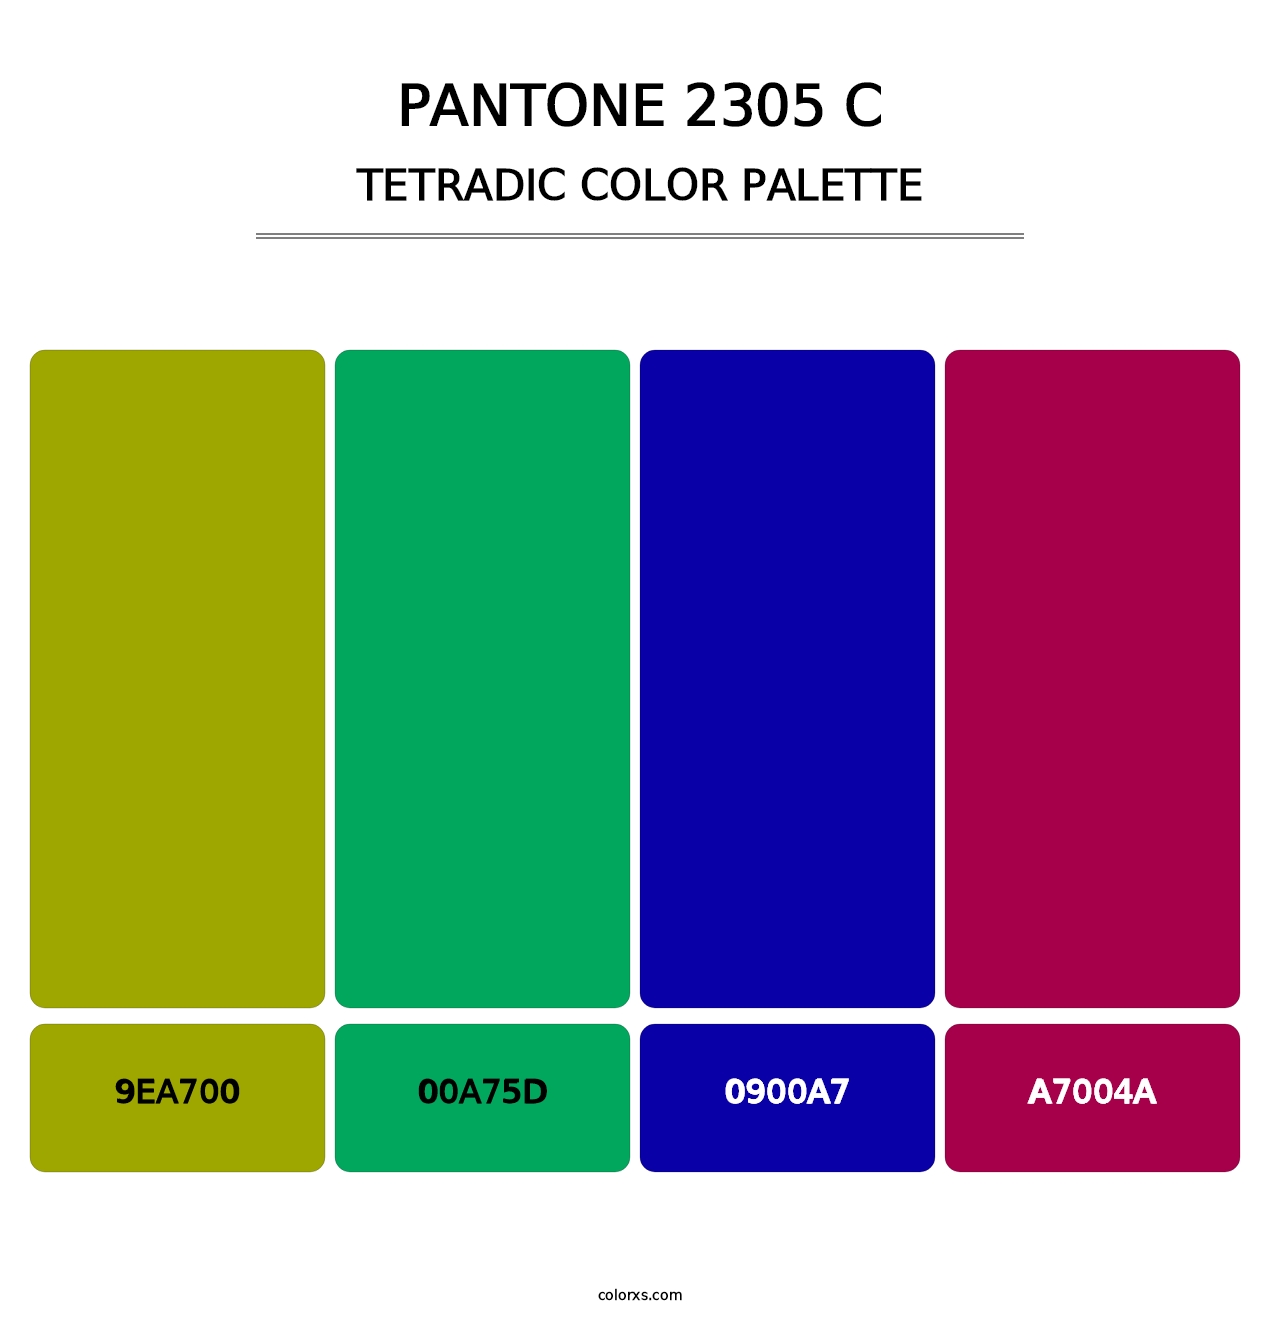 PANTONE 2305 C - Tetradic Color Palette